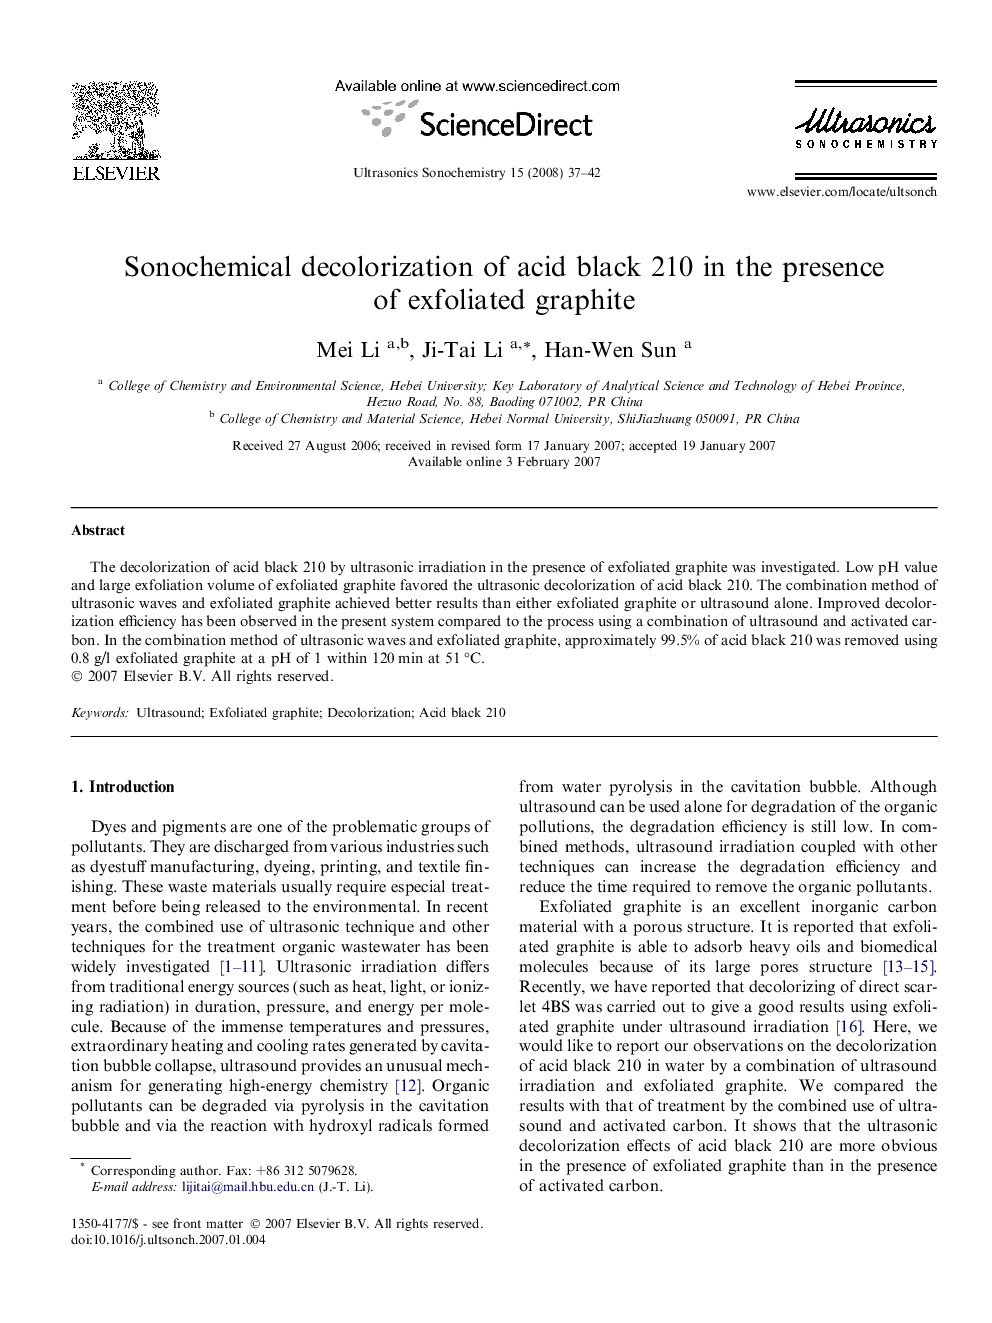 Sonochemical decolorization of acid black 210 in the presence of exfoliated graphite